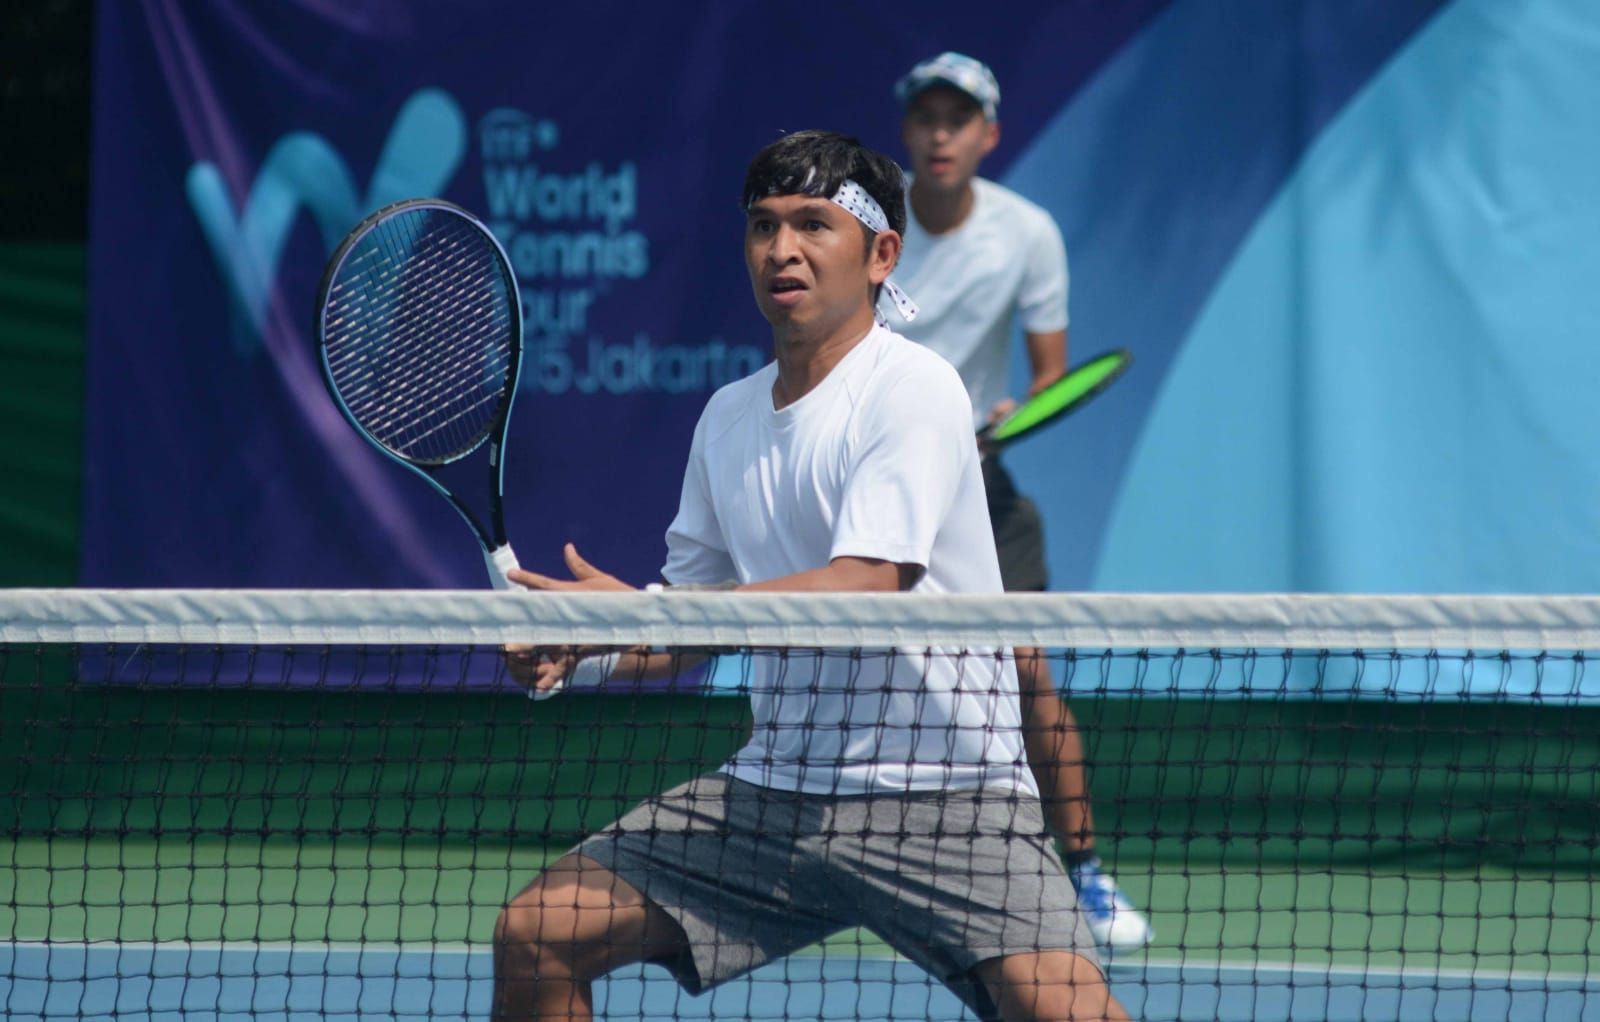 Ganda putra Nathan Anthony Barki (belakang)/Christopher Rungkat melaju ke final Amman International Tennis Championships 2022 pada Jumat (12/8/2022) di Jakarta.